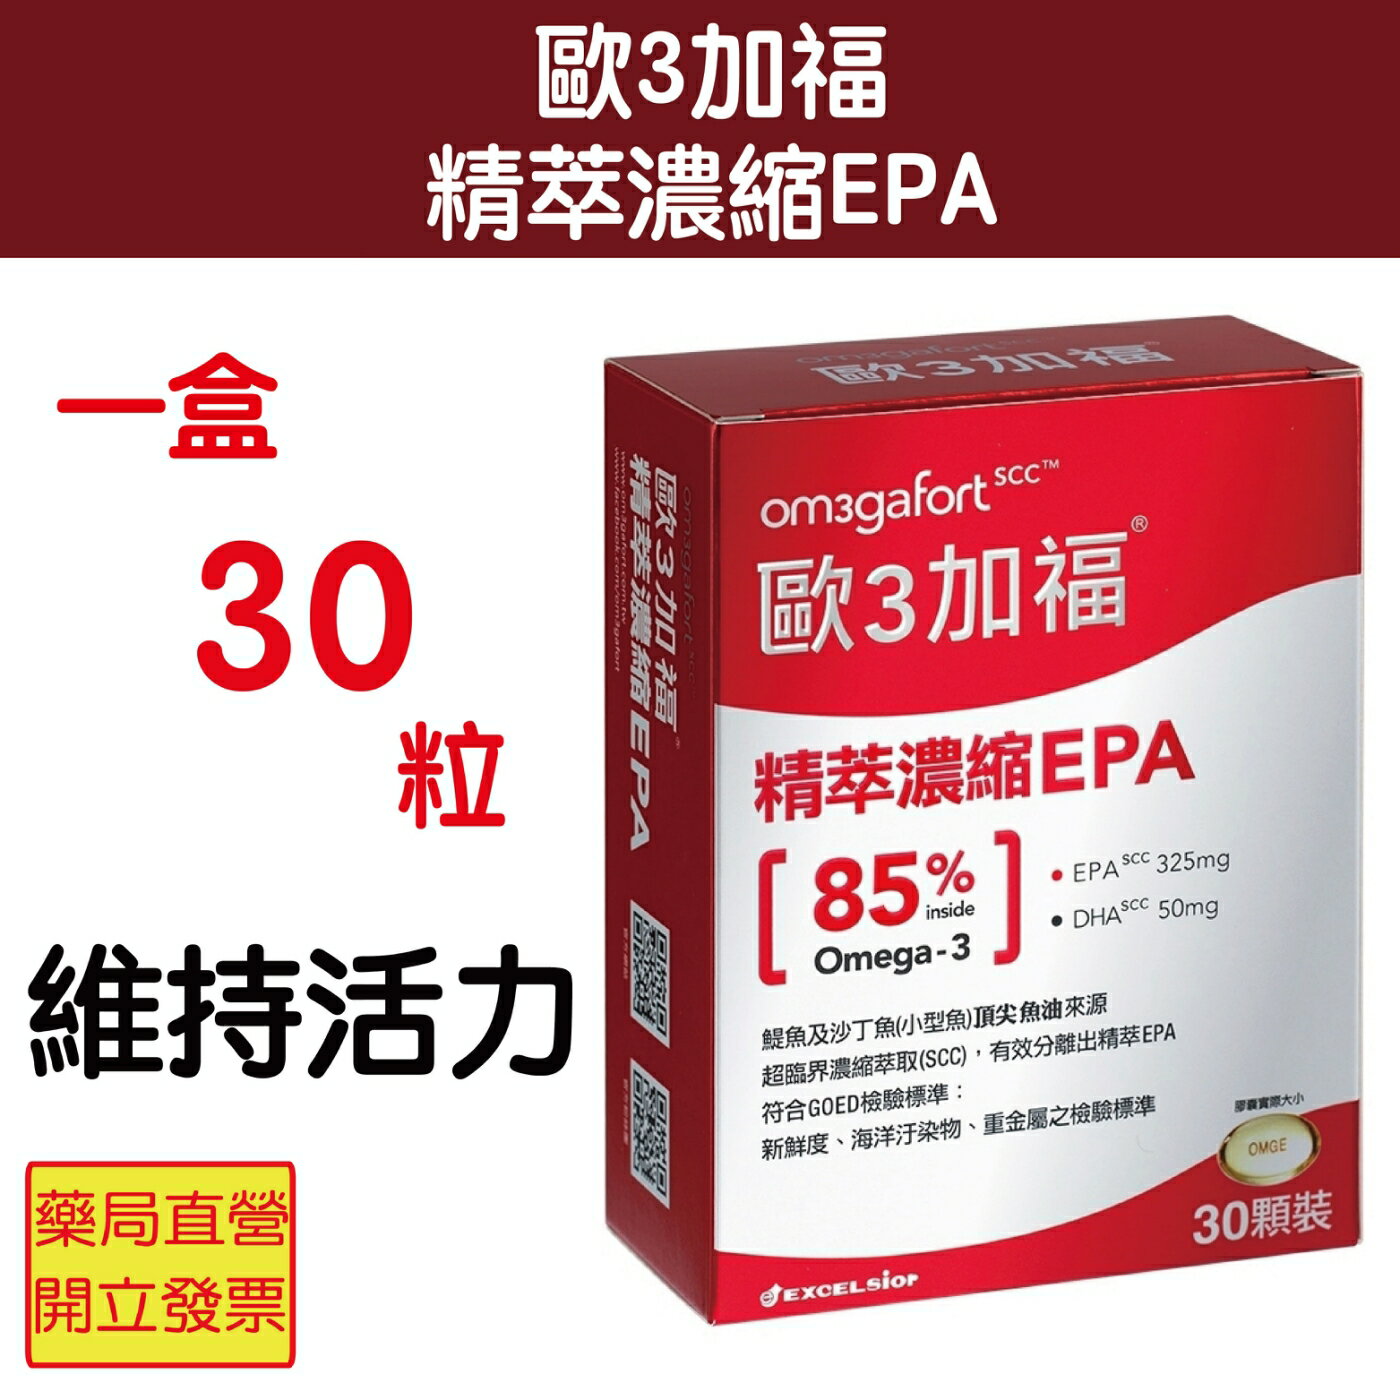 Om3gafort 歐3加福 精萃濃縮魚油EPA(30顆/盒) 維持活力